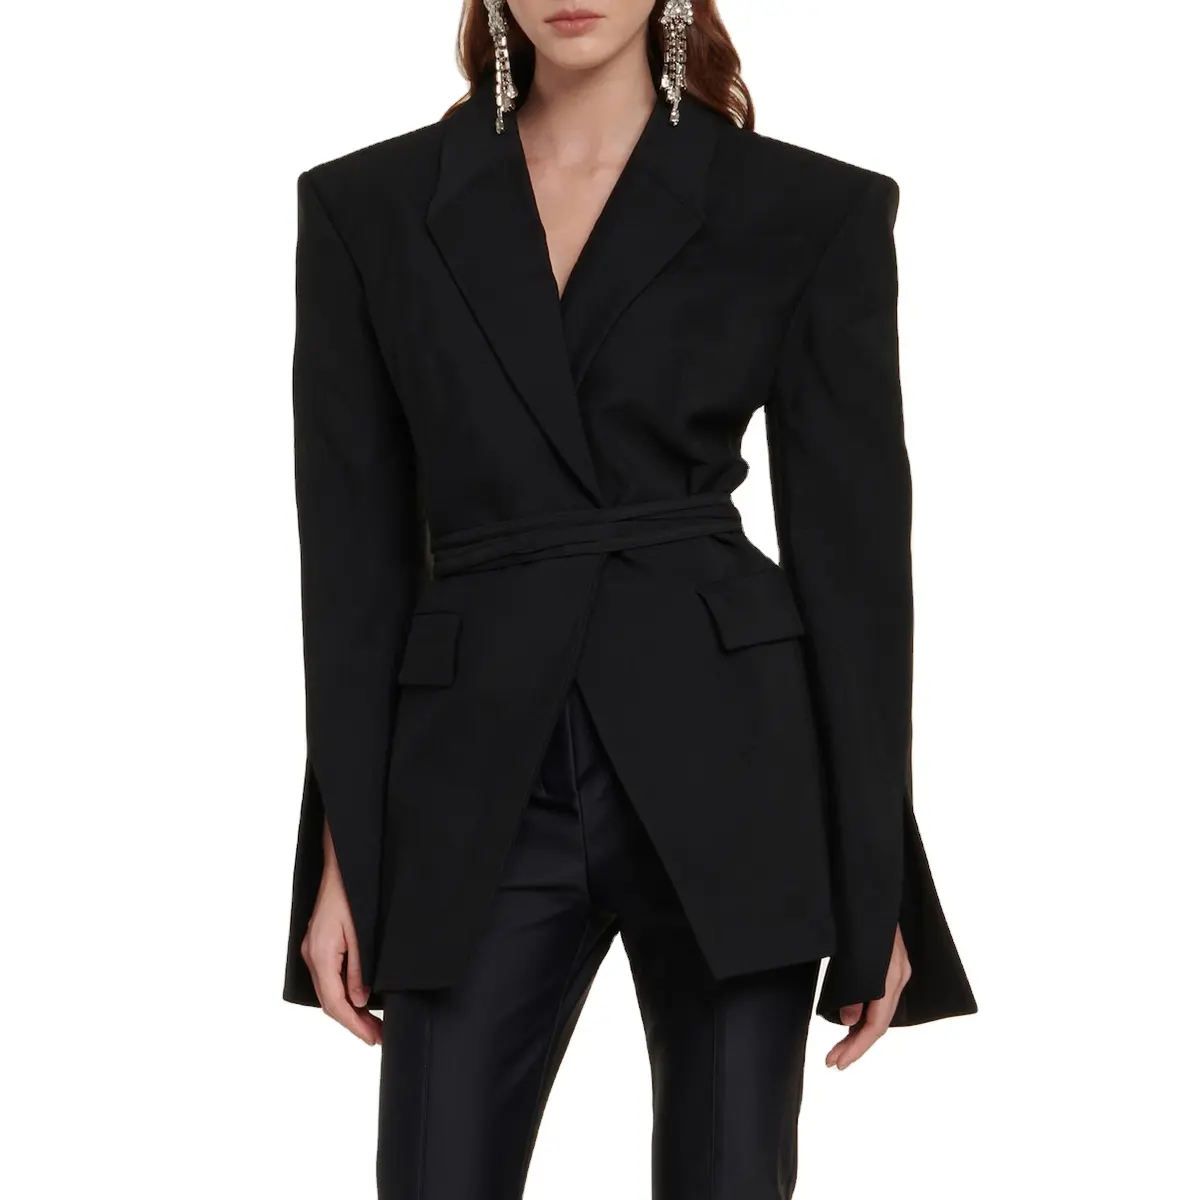 Hot spot sale solid color slim-fit backless open back blazers women blazers